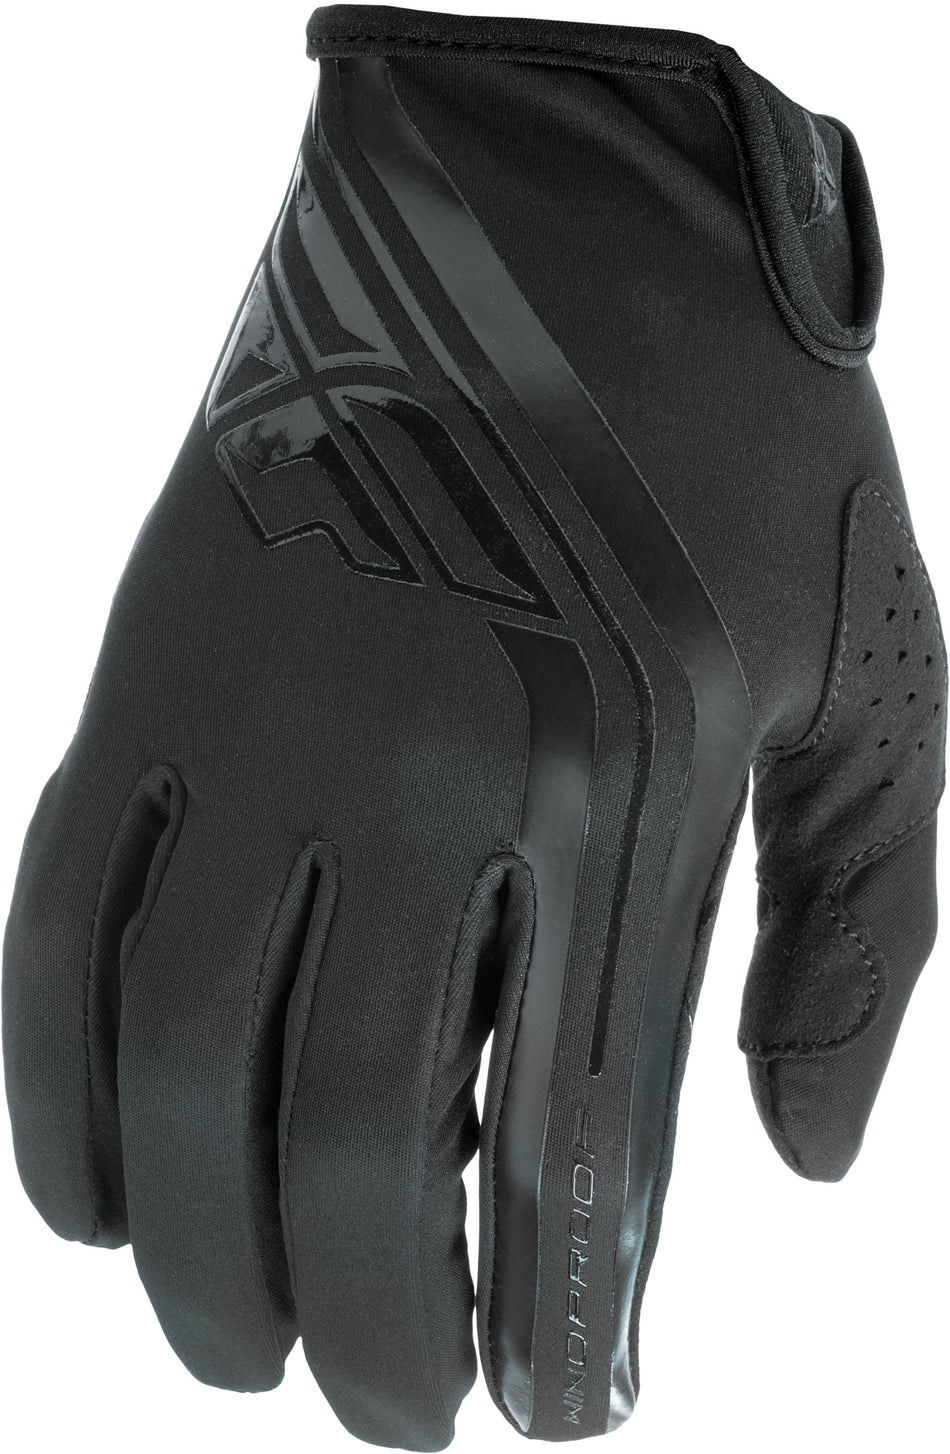 FLY RACING Windproof Gloves Black Sz 07 371-14007